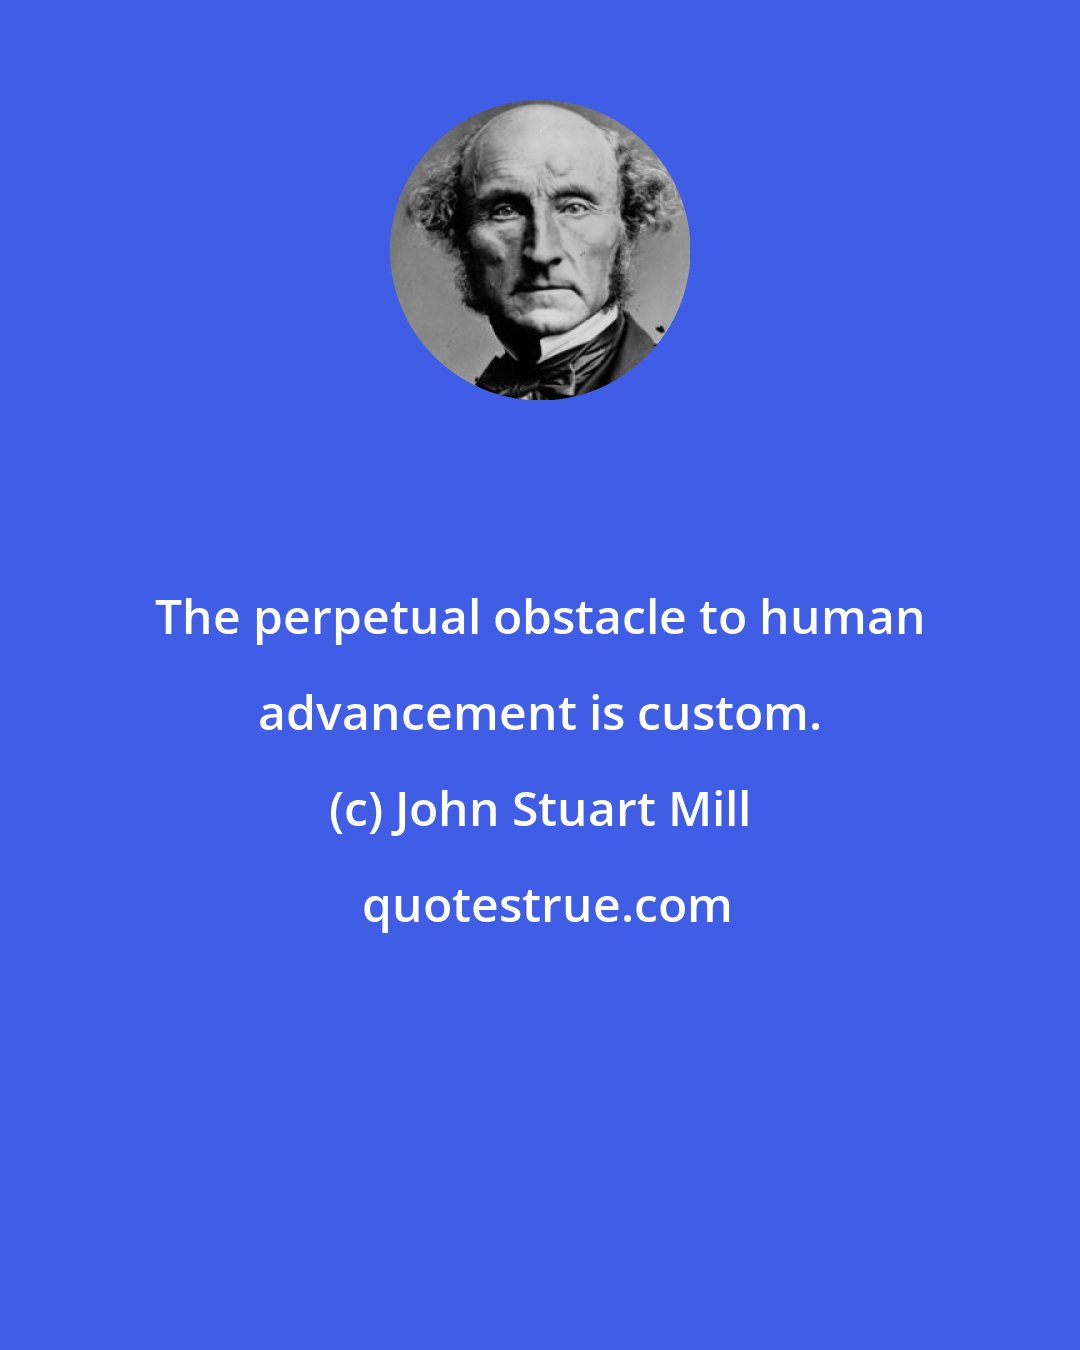 John Stuart Mill: The perpetual obstacle to human advancement is custom.